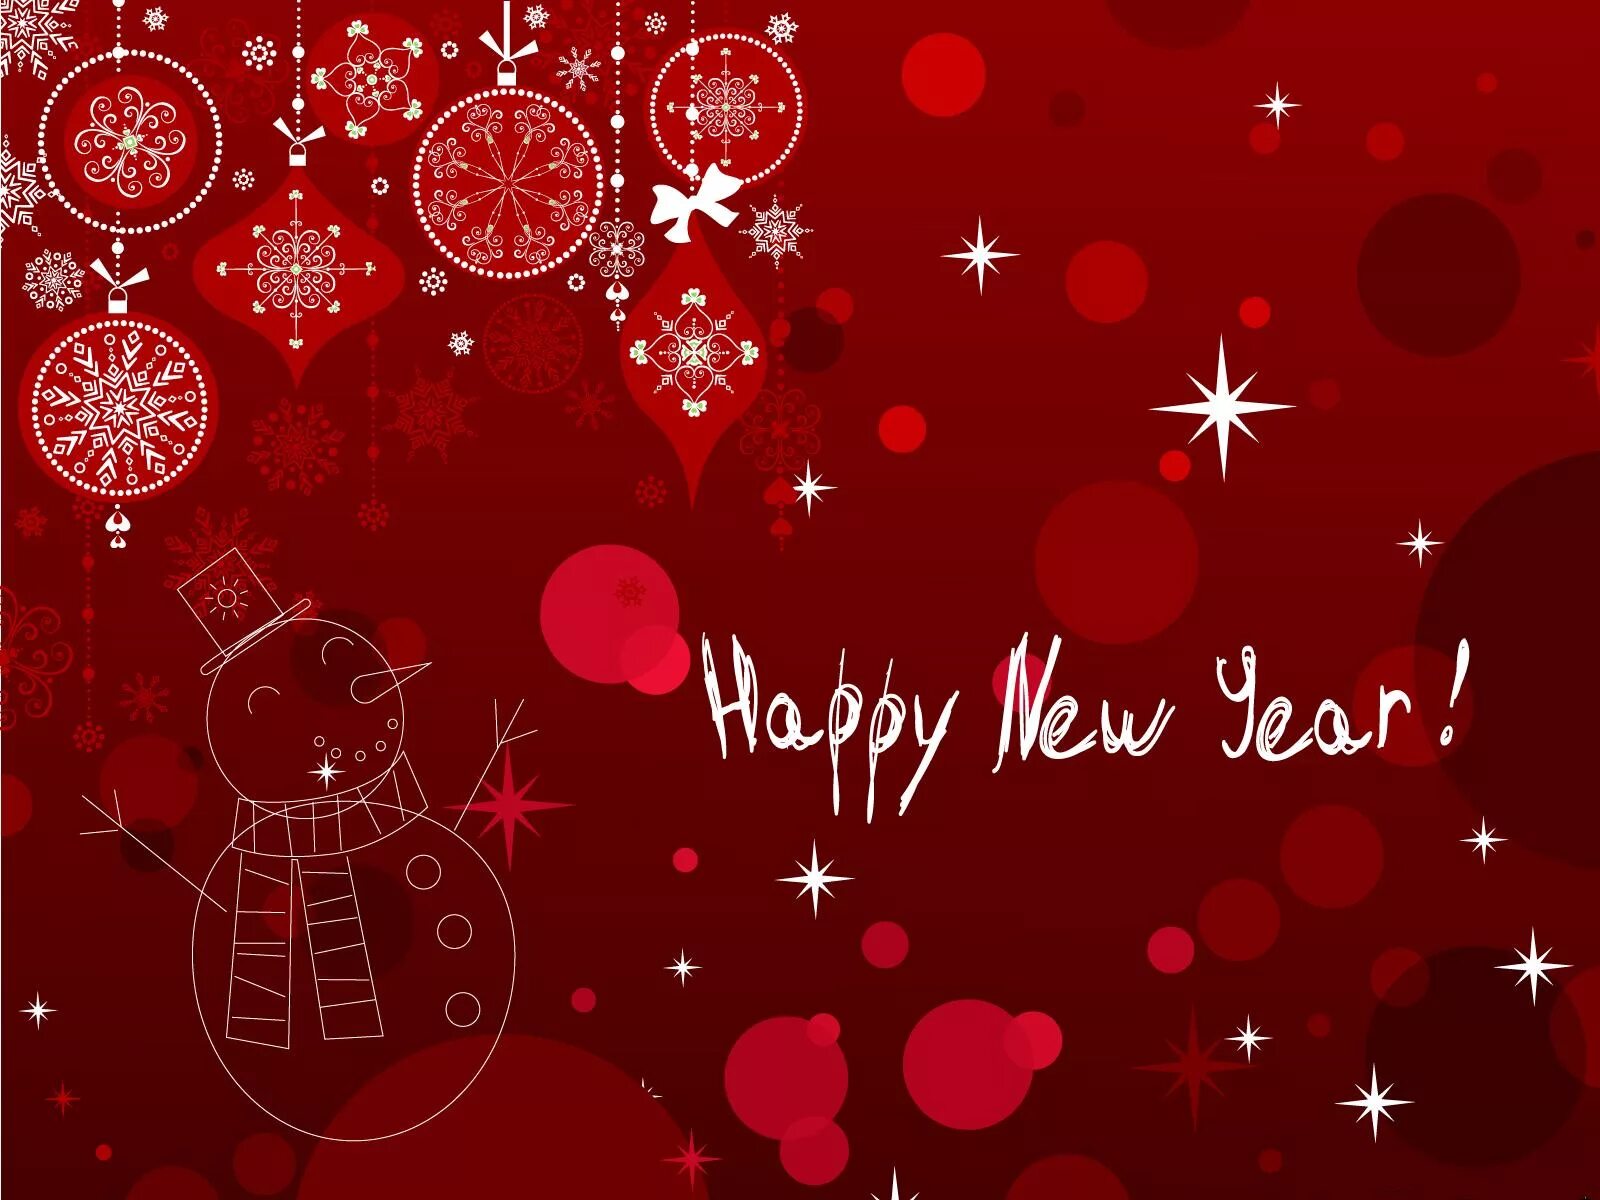 Happy New year открытки. Happy New year открытки на английском. Счастливого нового года. Новогодняя открытка по английскому. My favorite new year